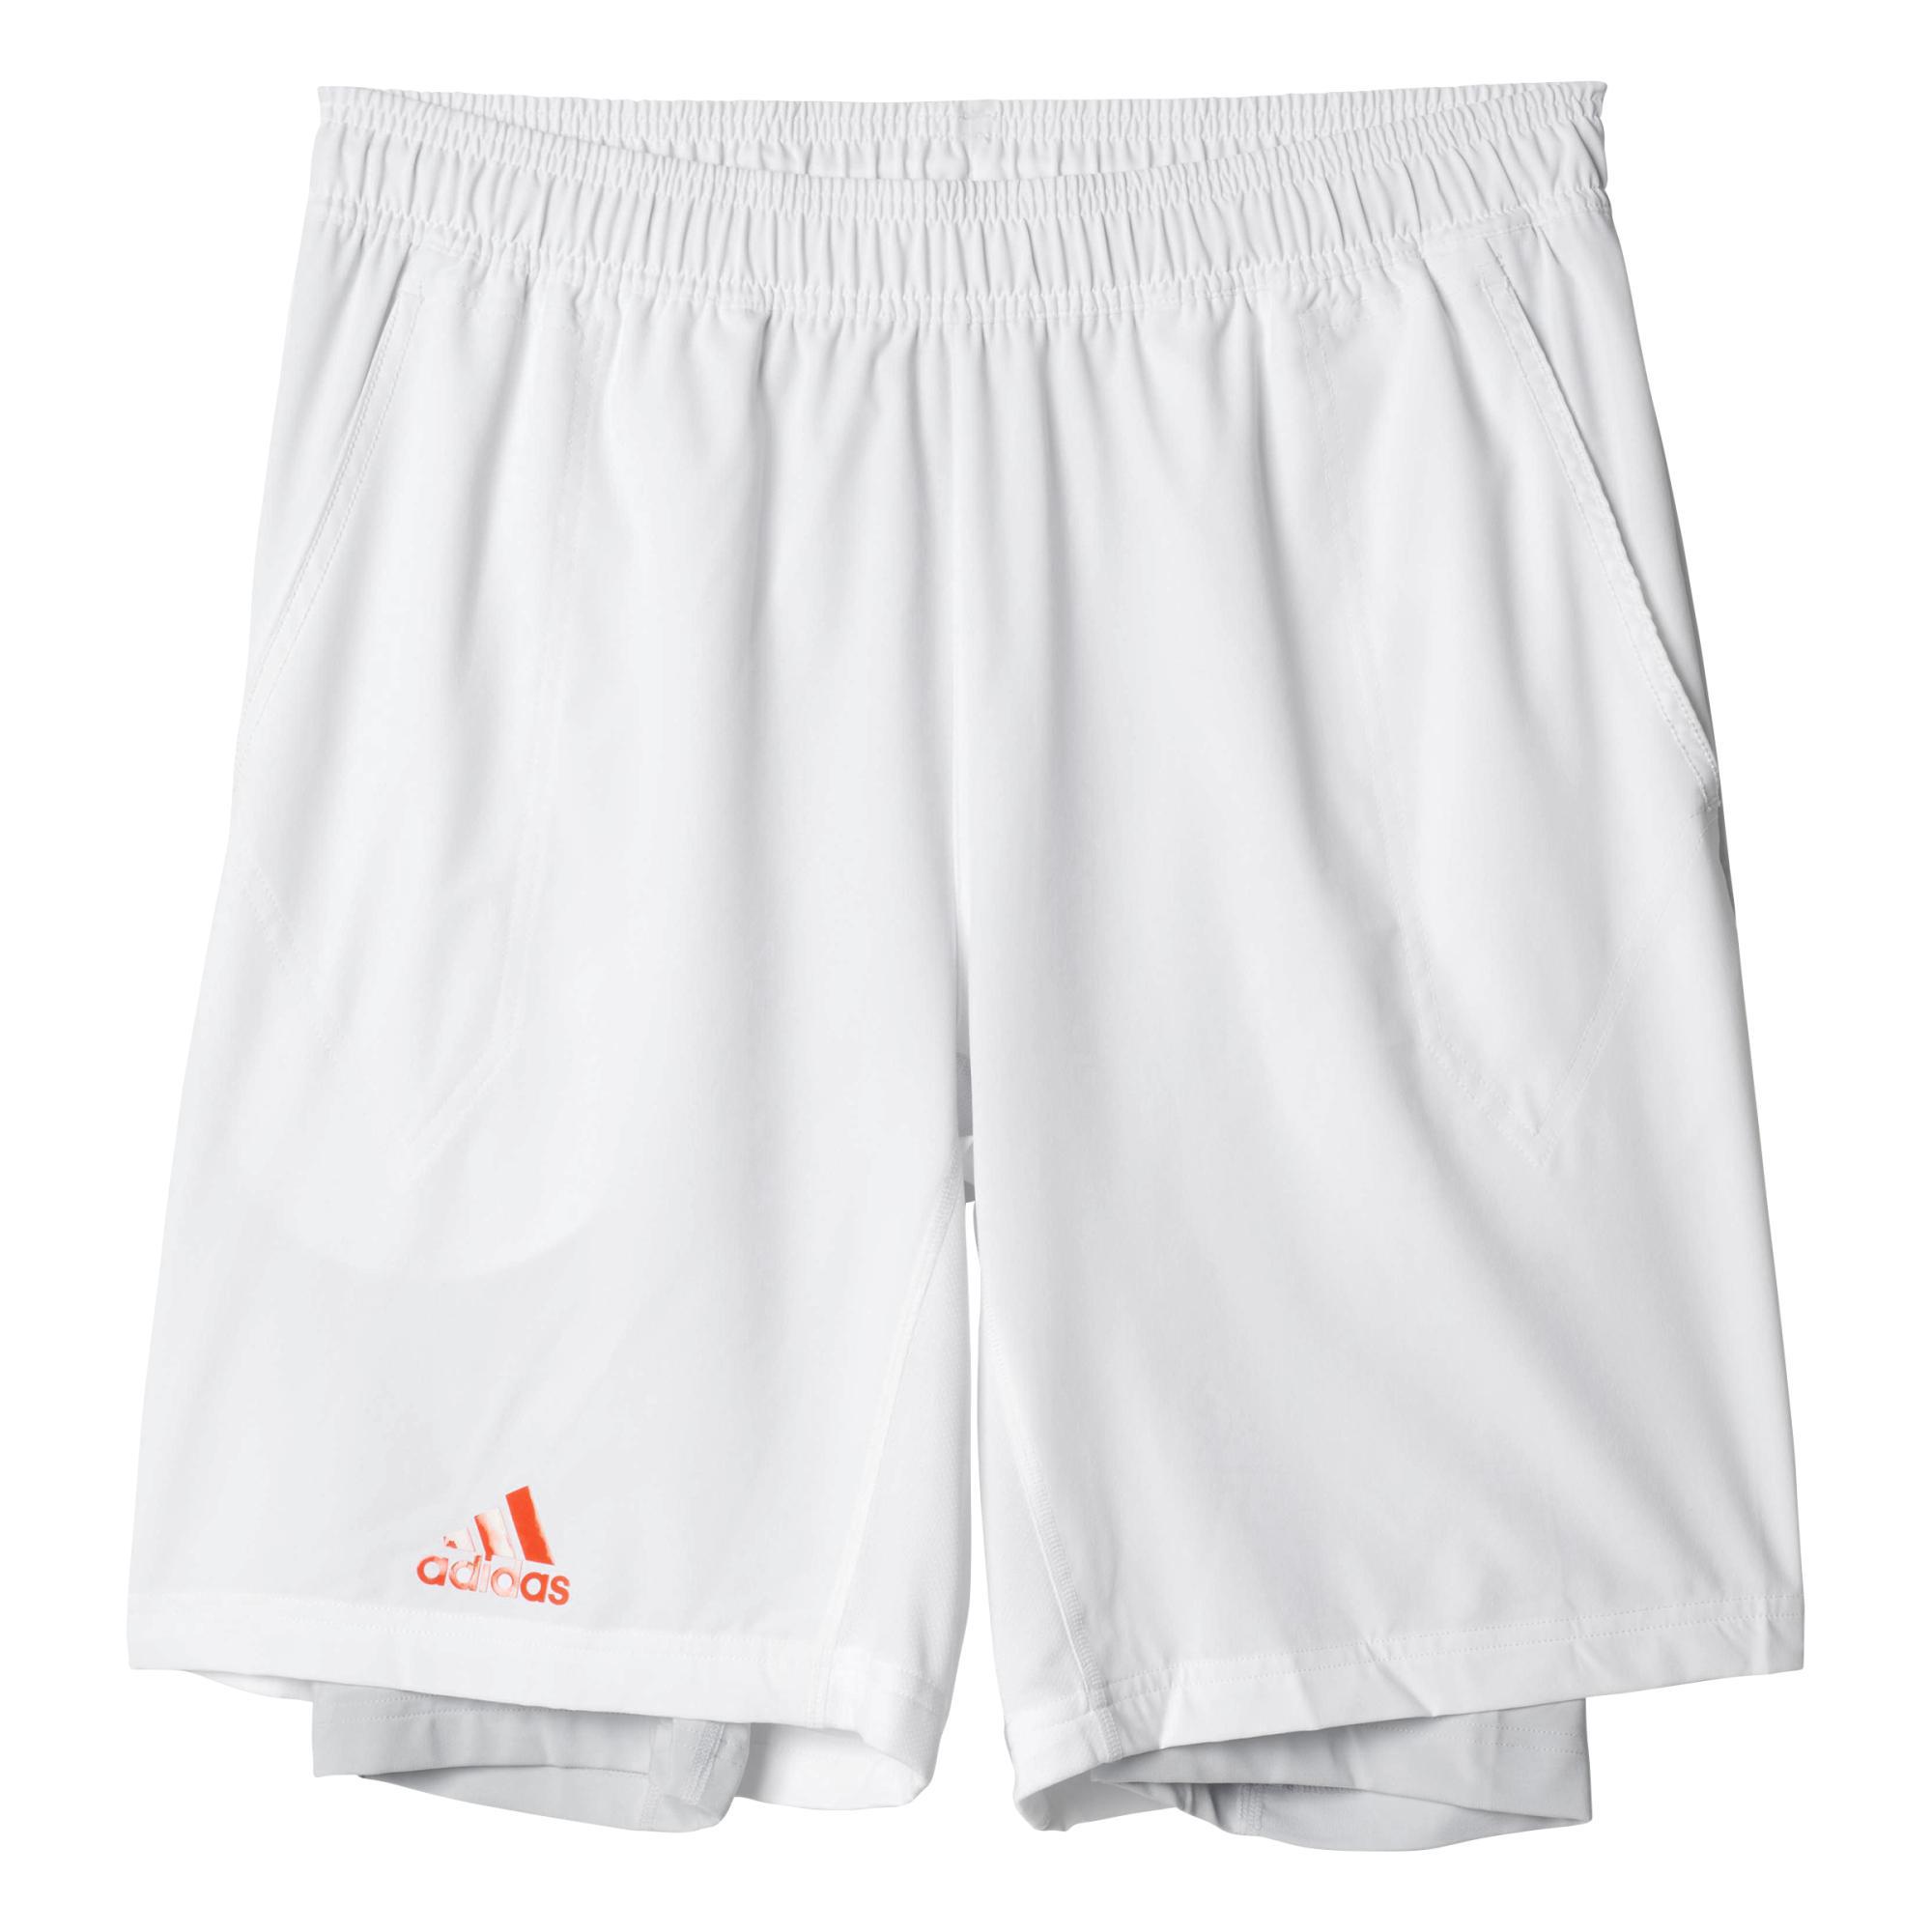 Adidas Mens Adizero 2in1 Bermuda Shorts - White - Tennisnuts.com